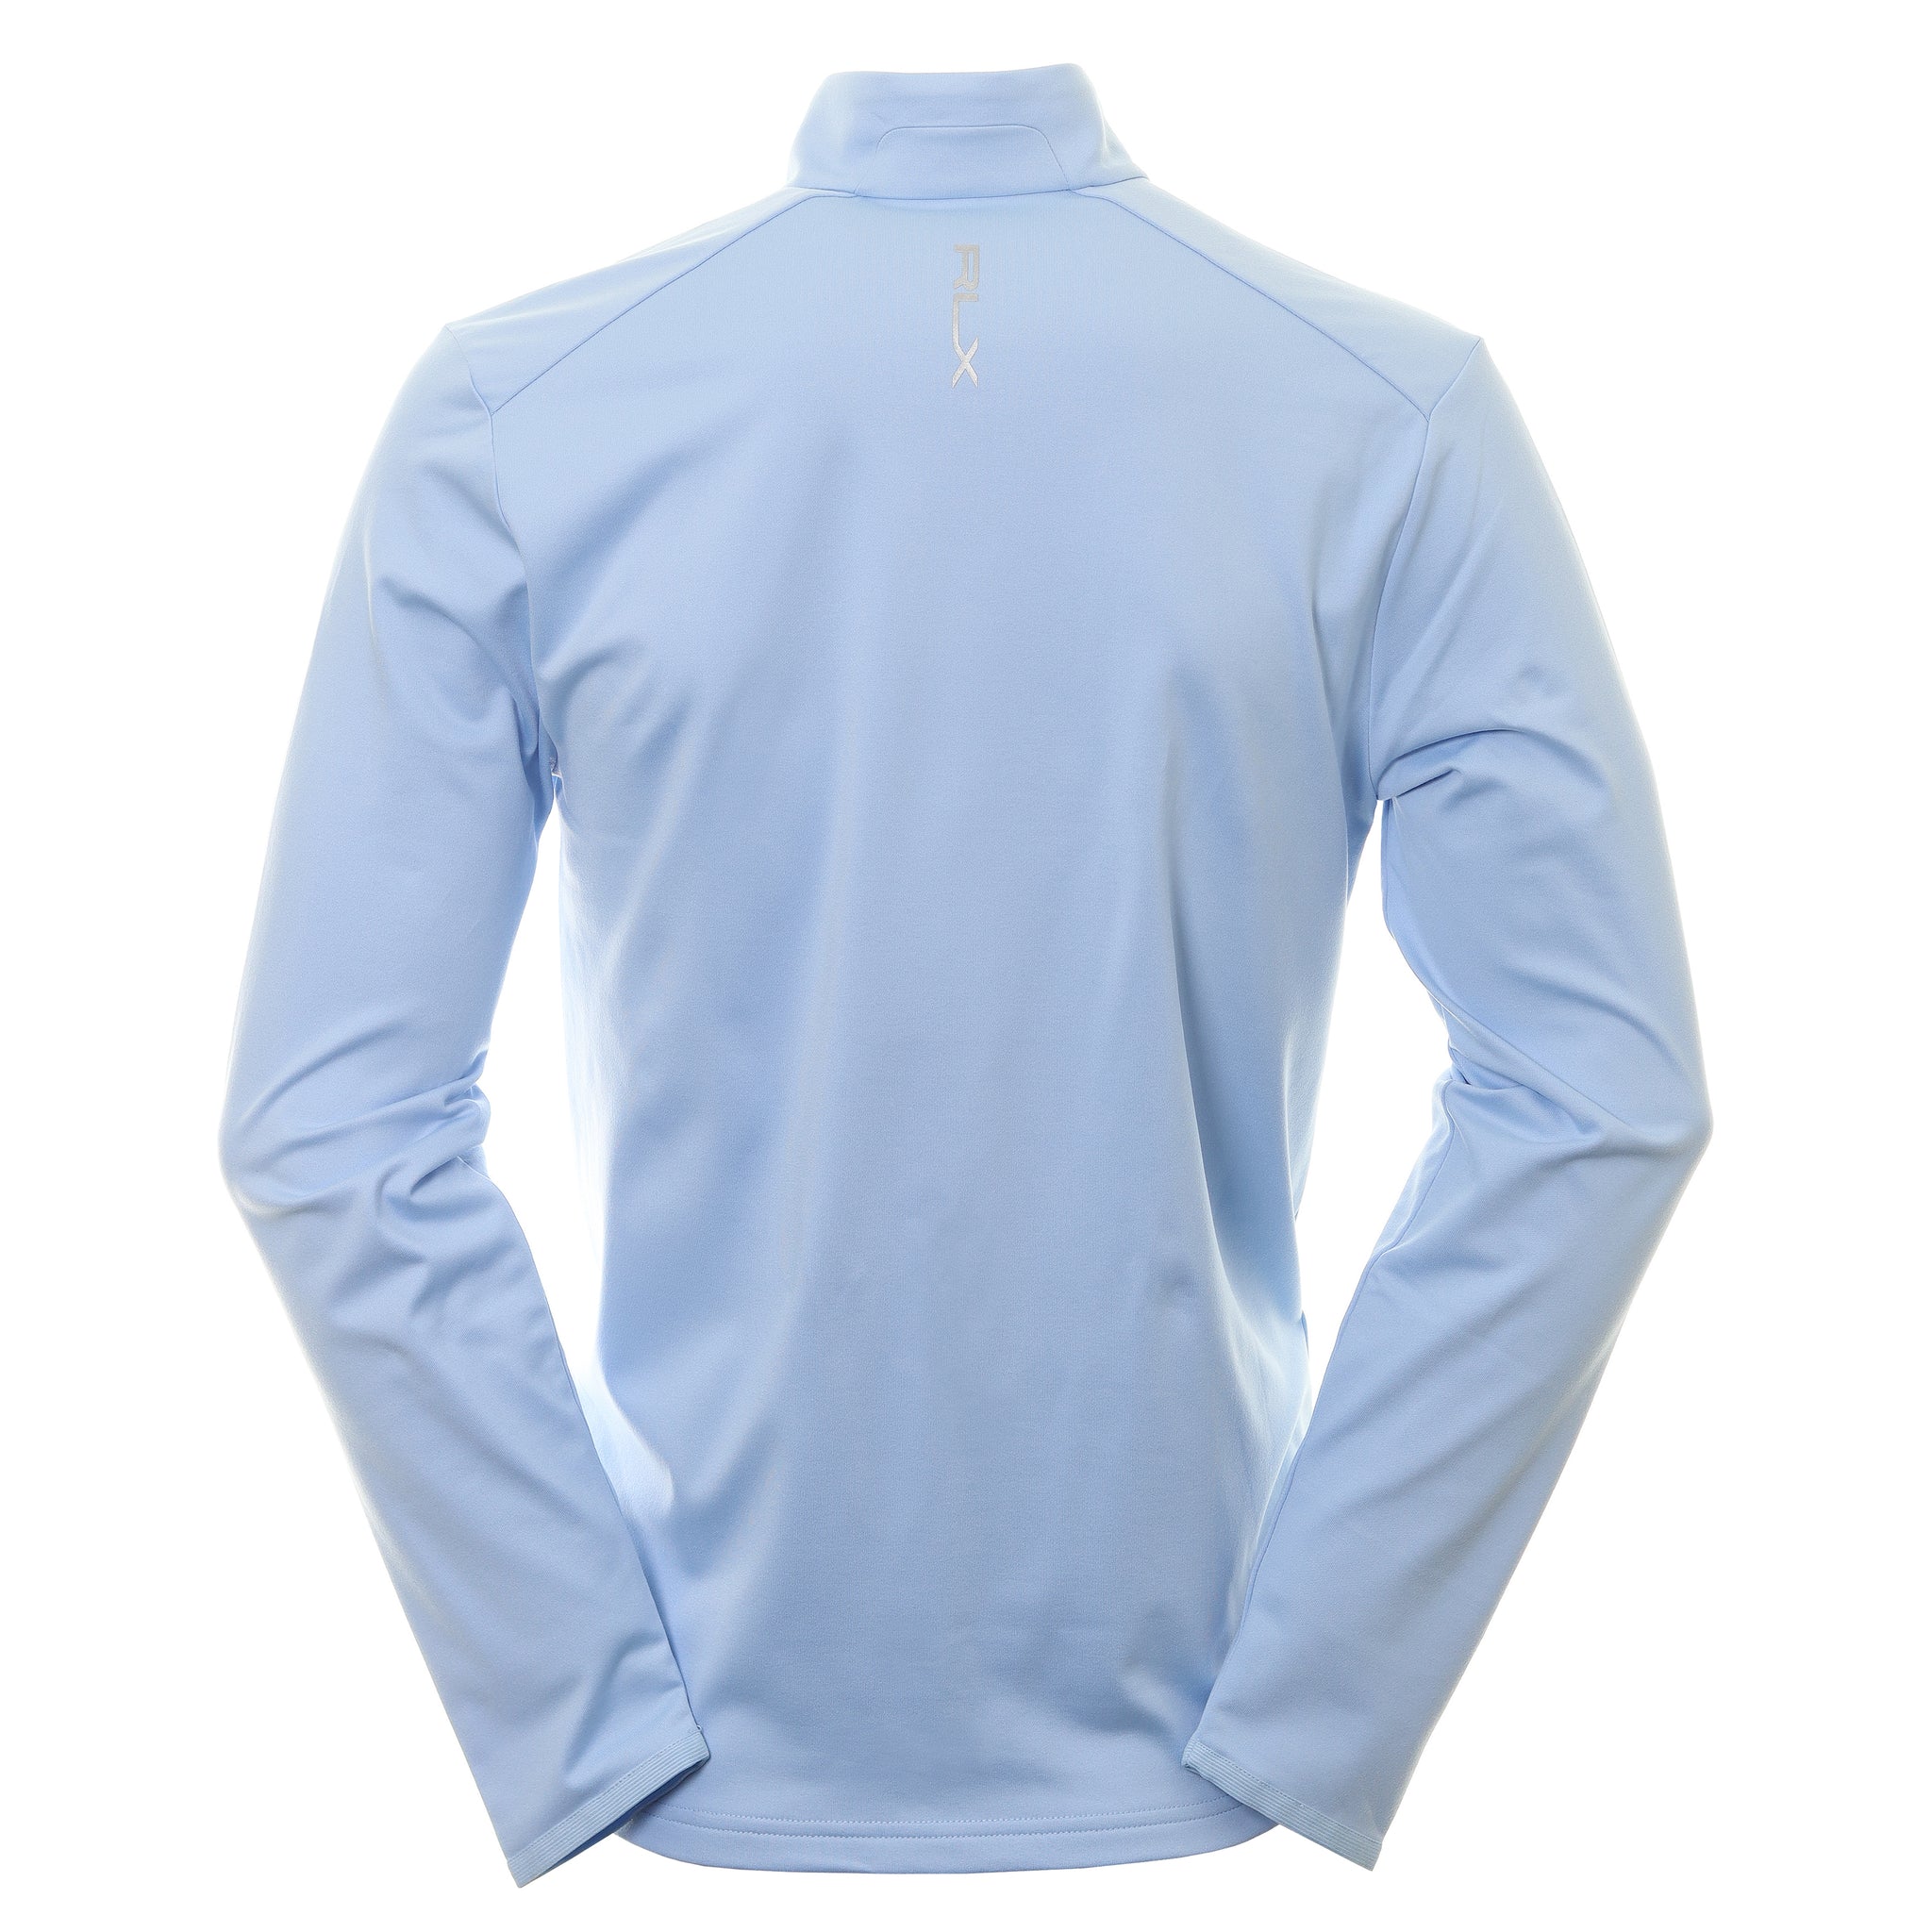 rlx-ralph-lauren-stretch-jersey-half-zip-785875305-elite-blue-003